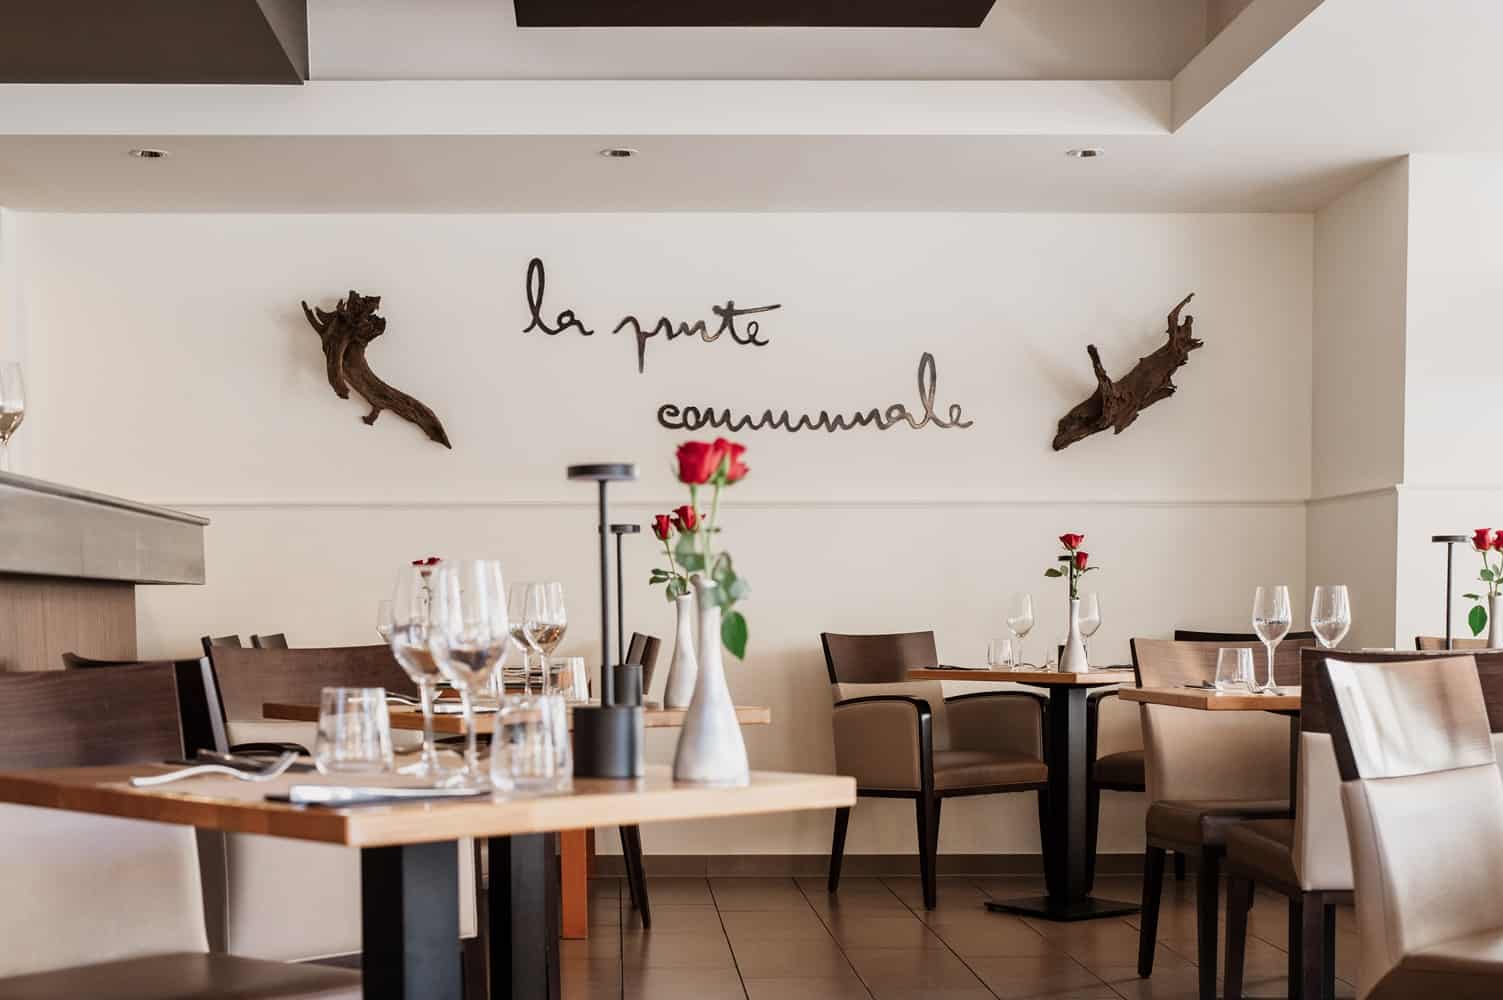 pinte communale restaurant gastronomique brasserie aigle suisse